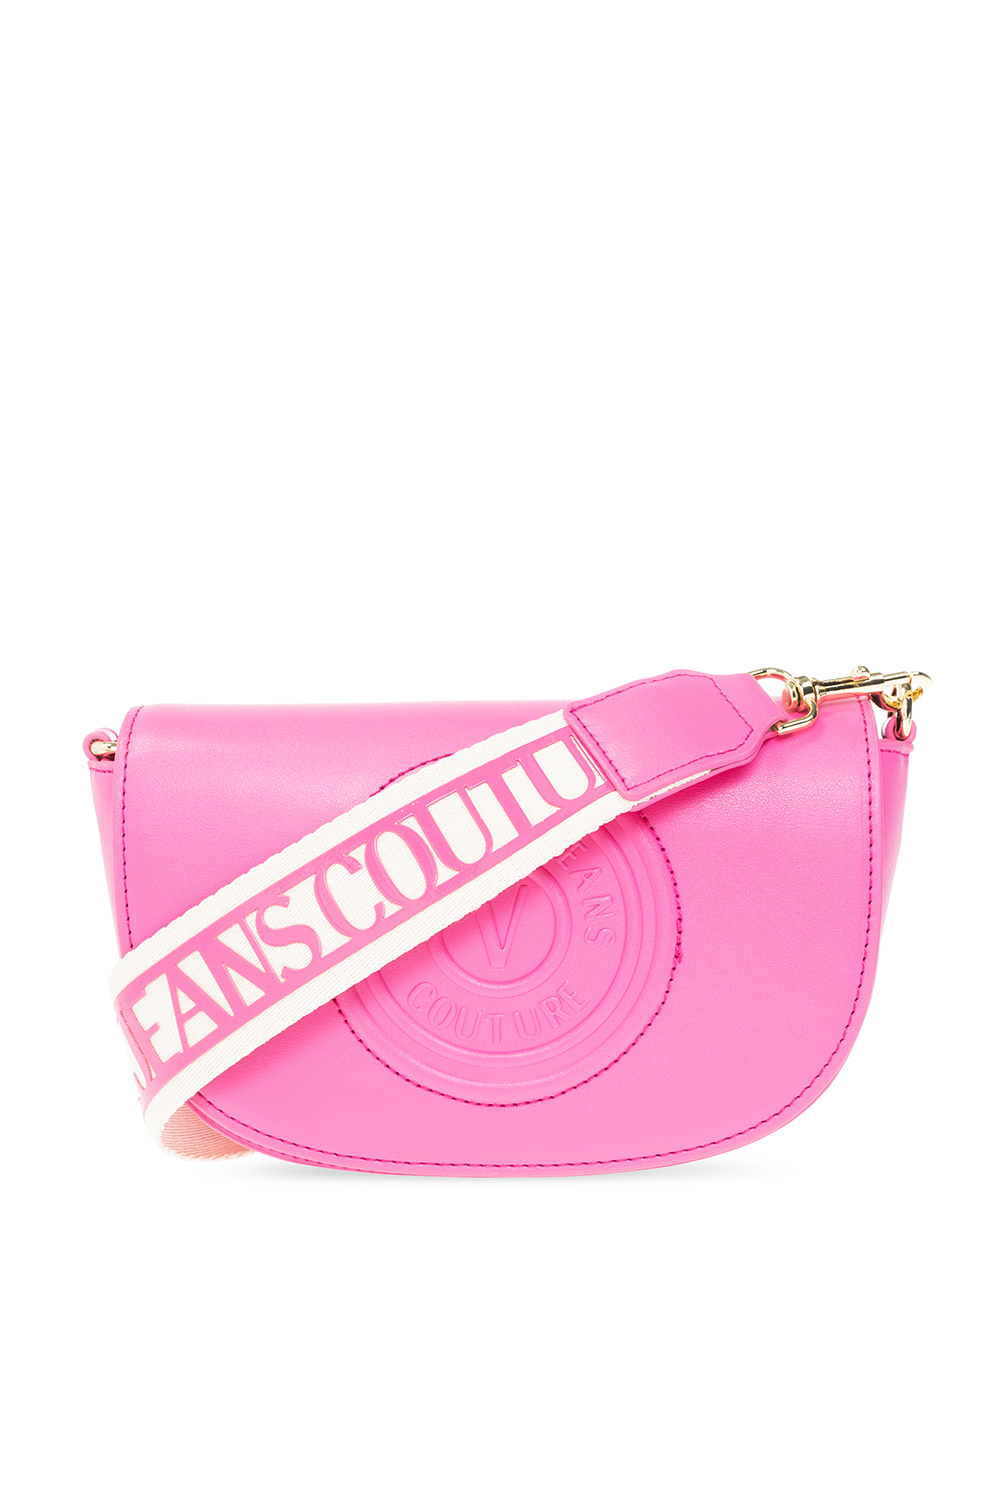 Pink Shoulder bag with logo Versace Jeans Couture - Vitkac France